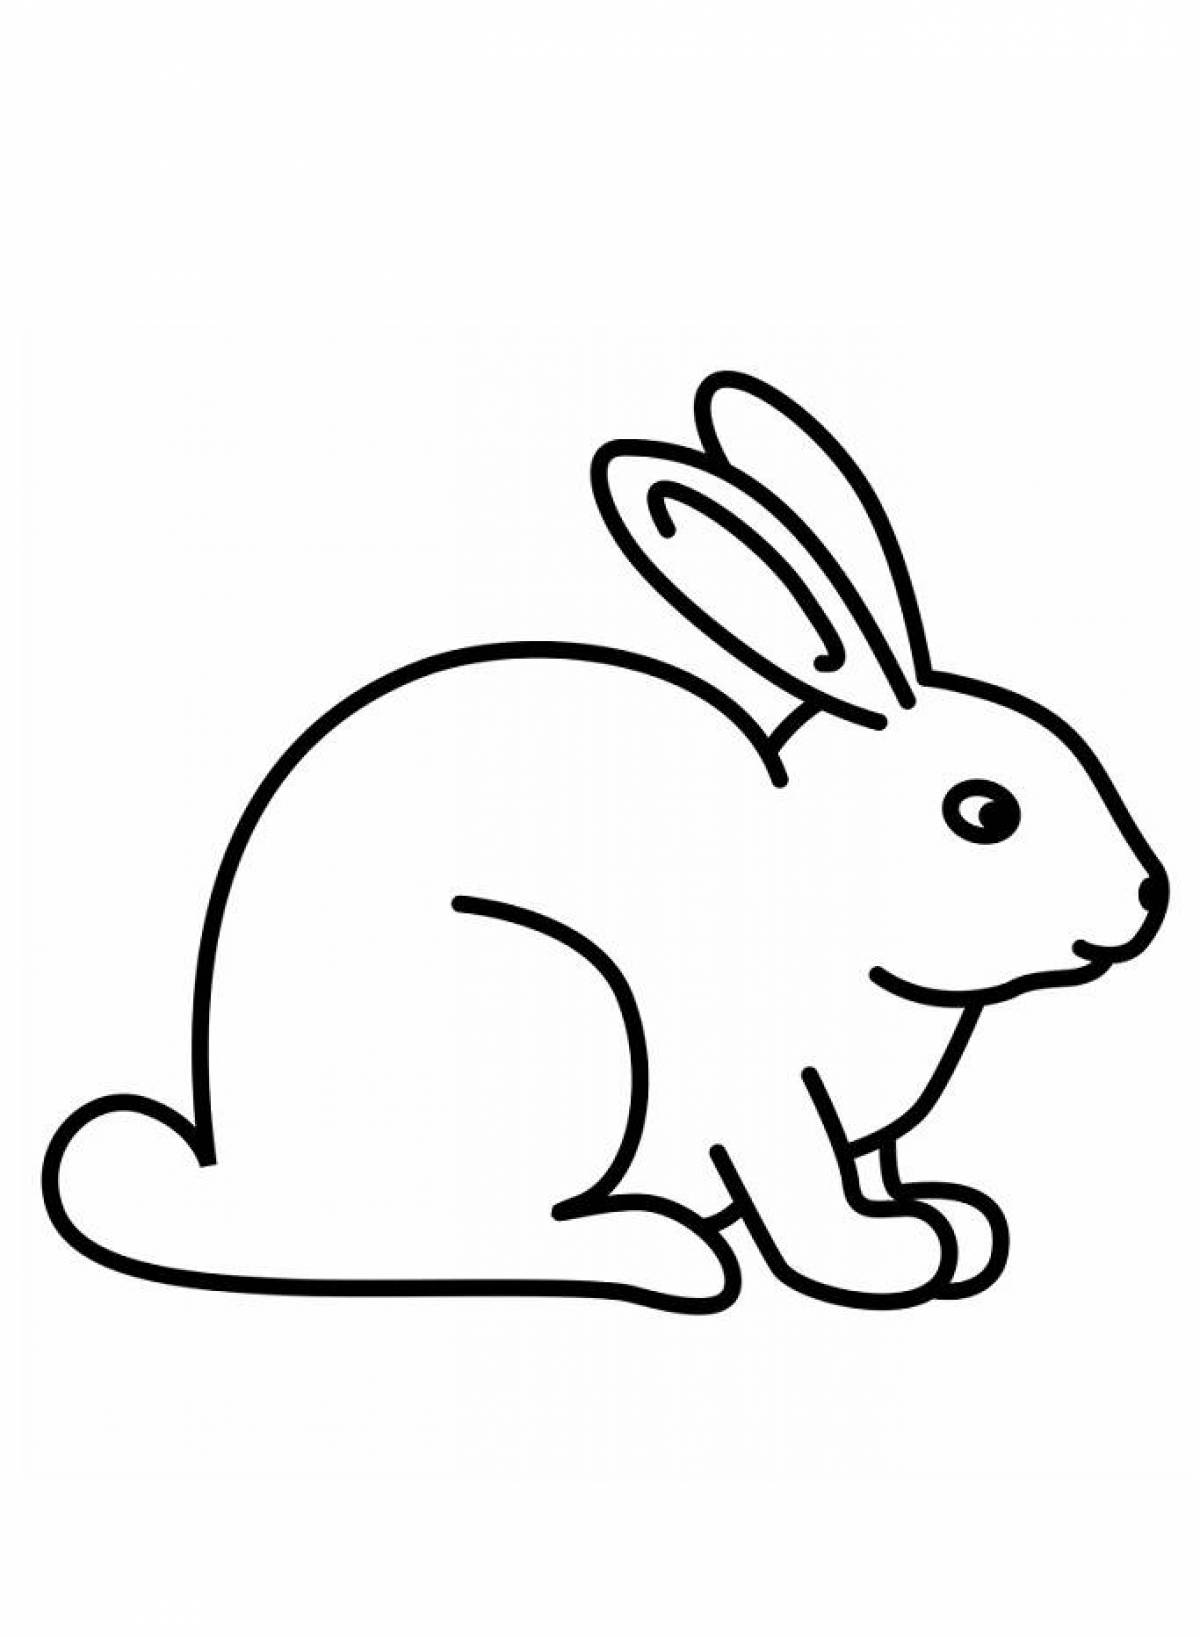 Живая раскраска page bunny picture